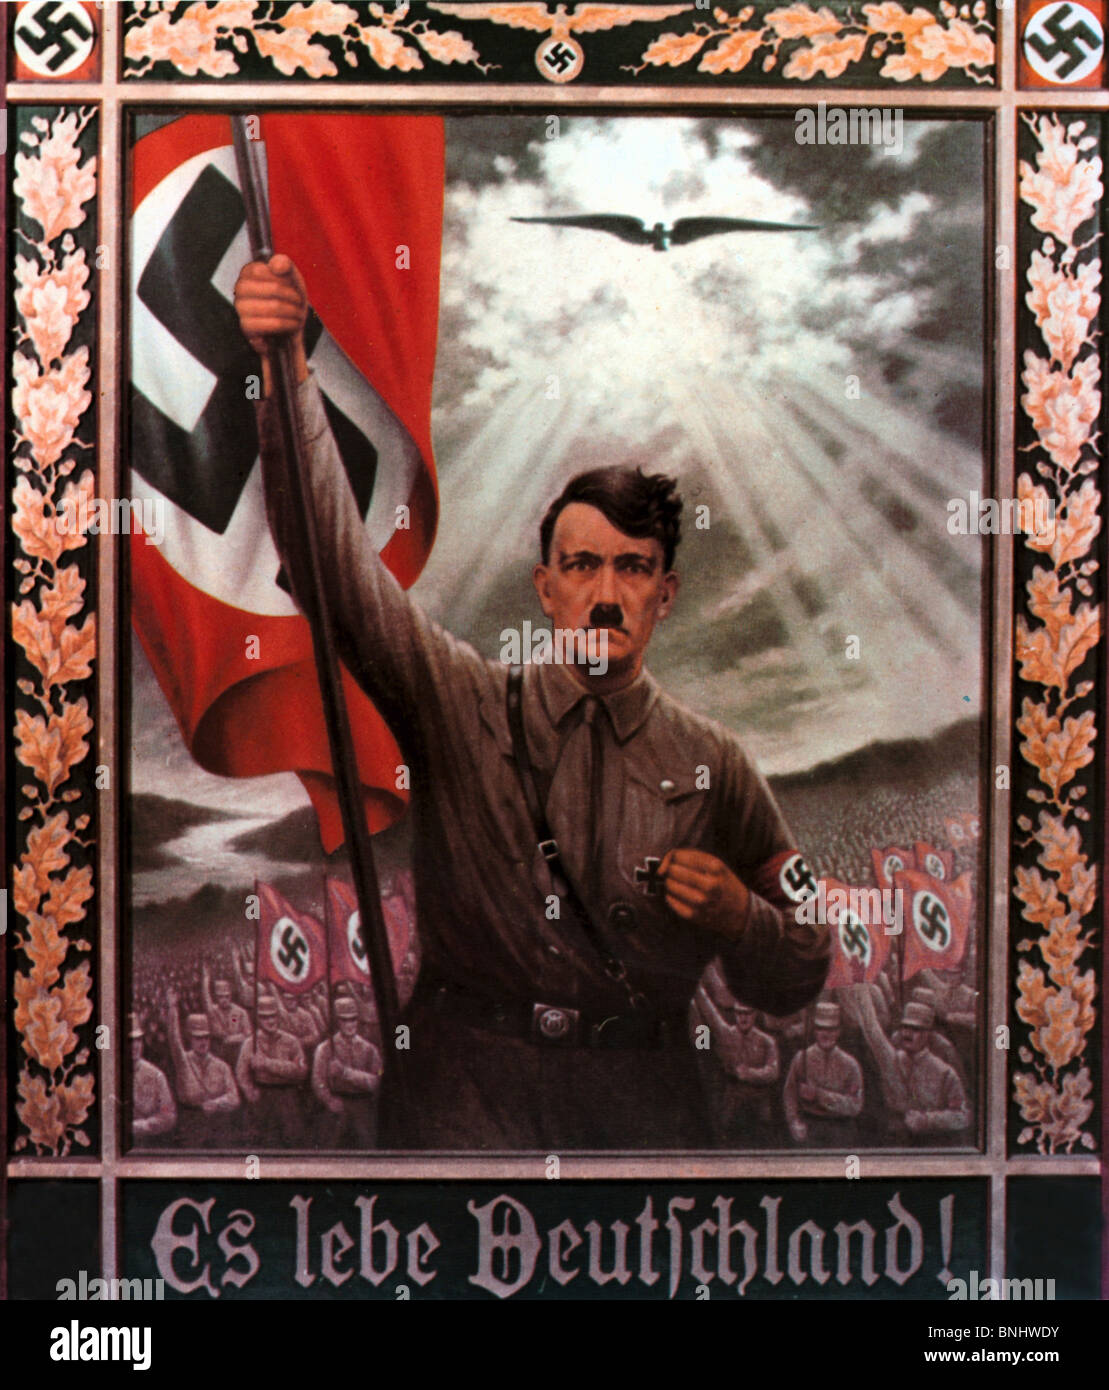 Adolf Hitler Propaganda Poster NSDAP Nazi party thirties 30s Nazis Nazism Nazi Germany Germany history historic historical Stock Photo